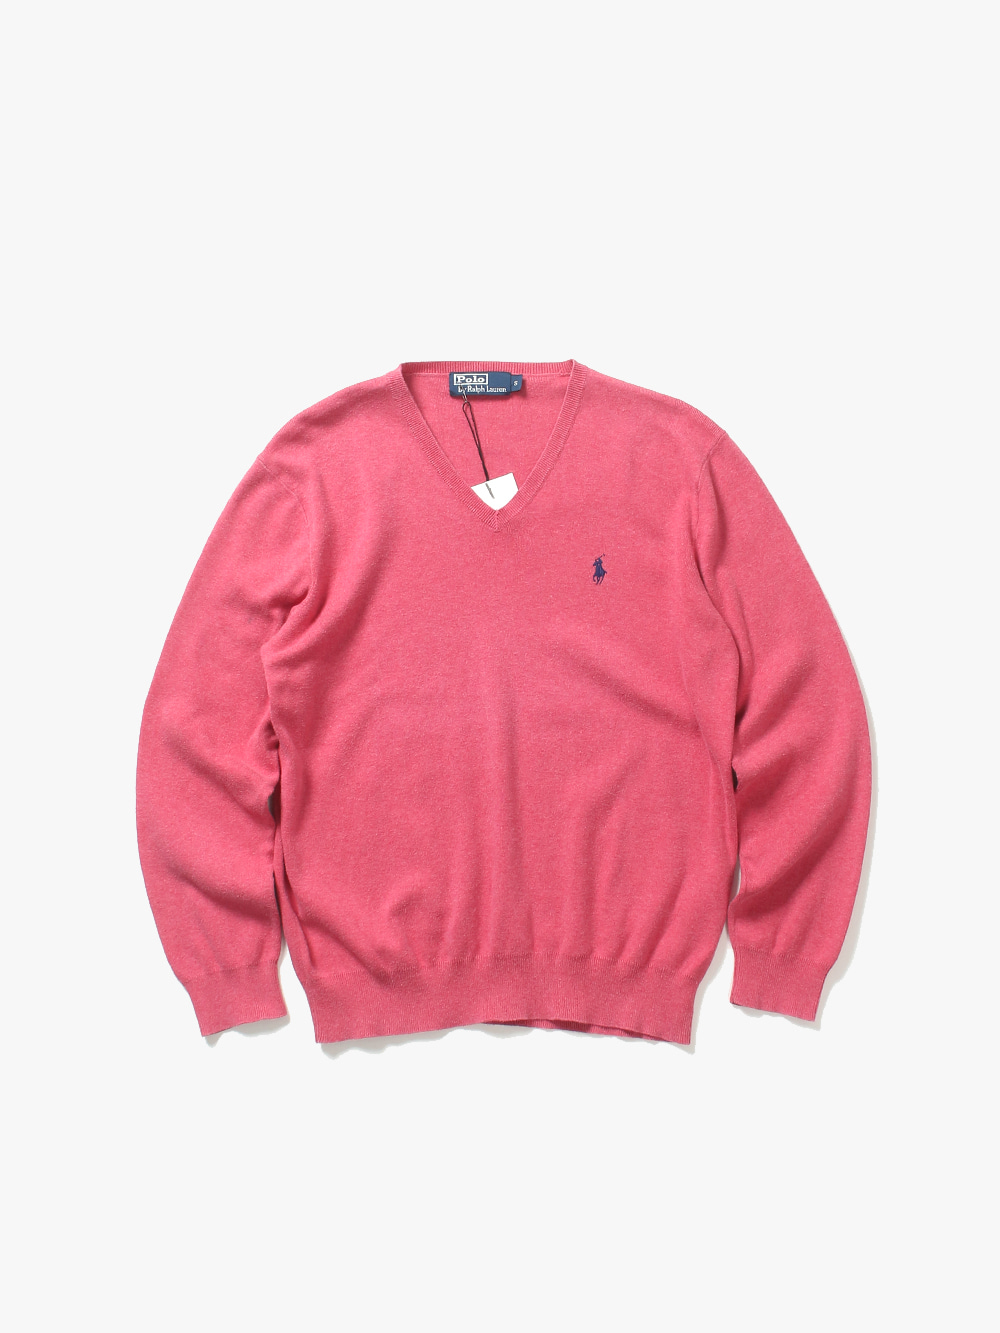 [ S ] Polo Ralph Lauren Sweater (6452)